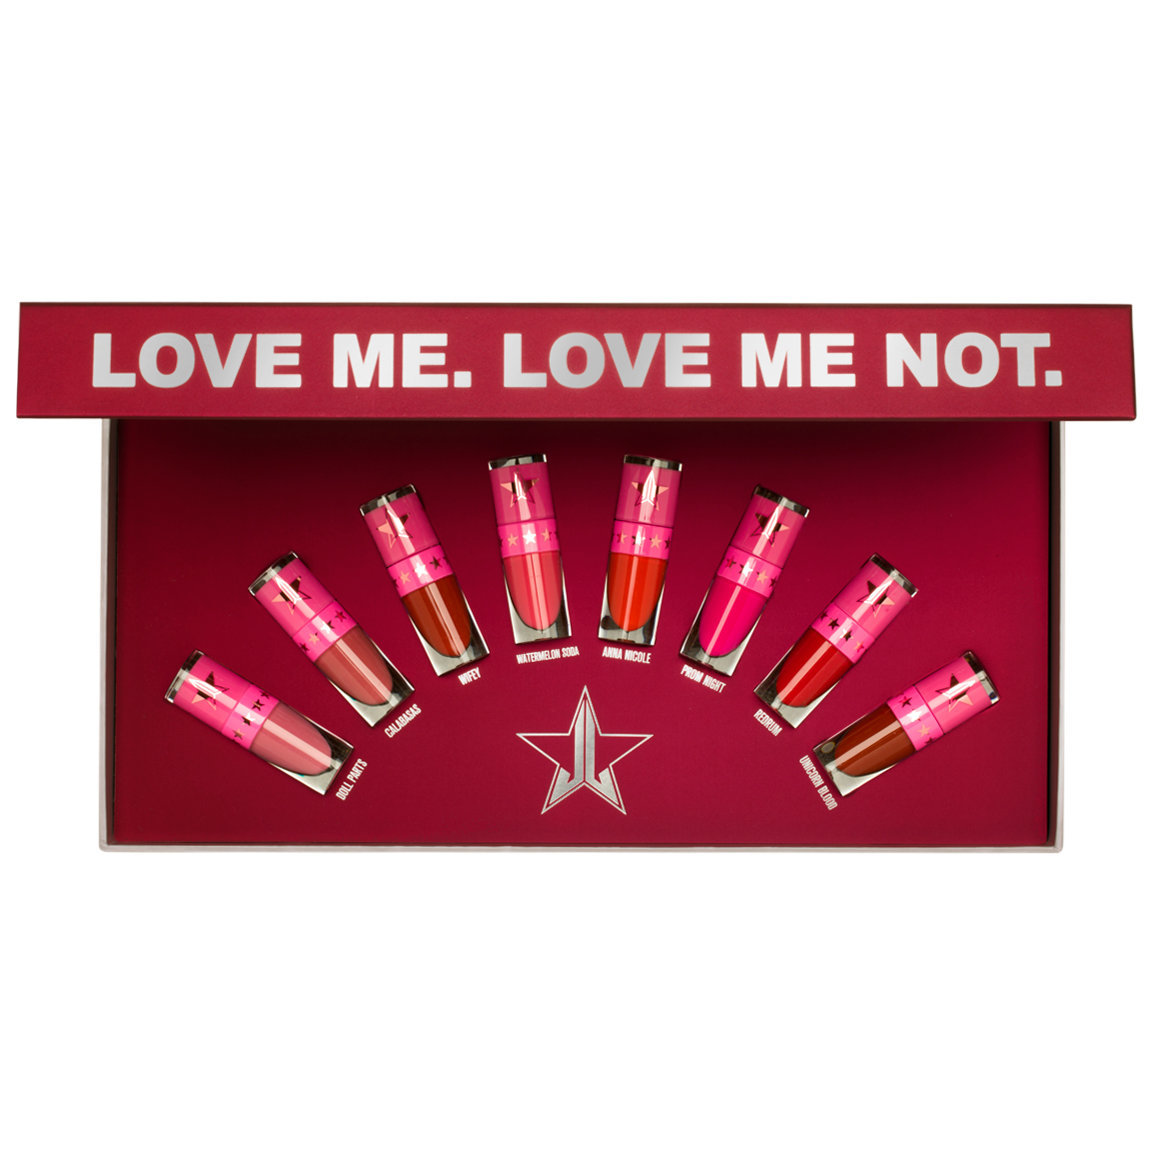 The Velour Liquid Lipsticks feature a range of pinks 